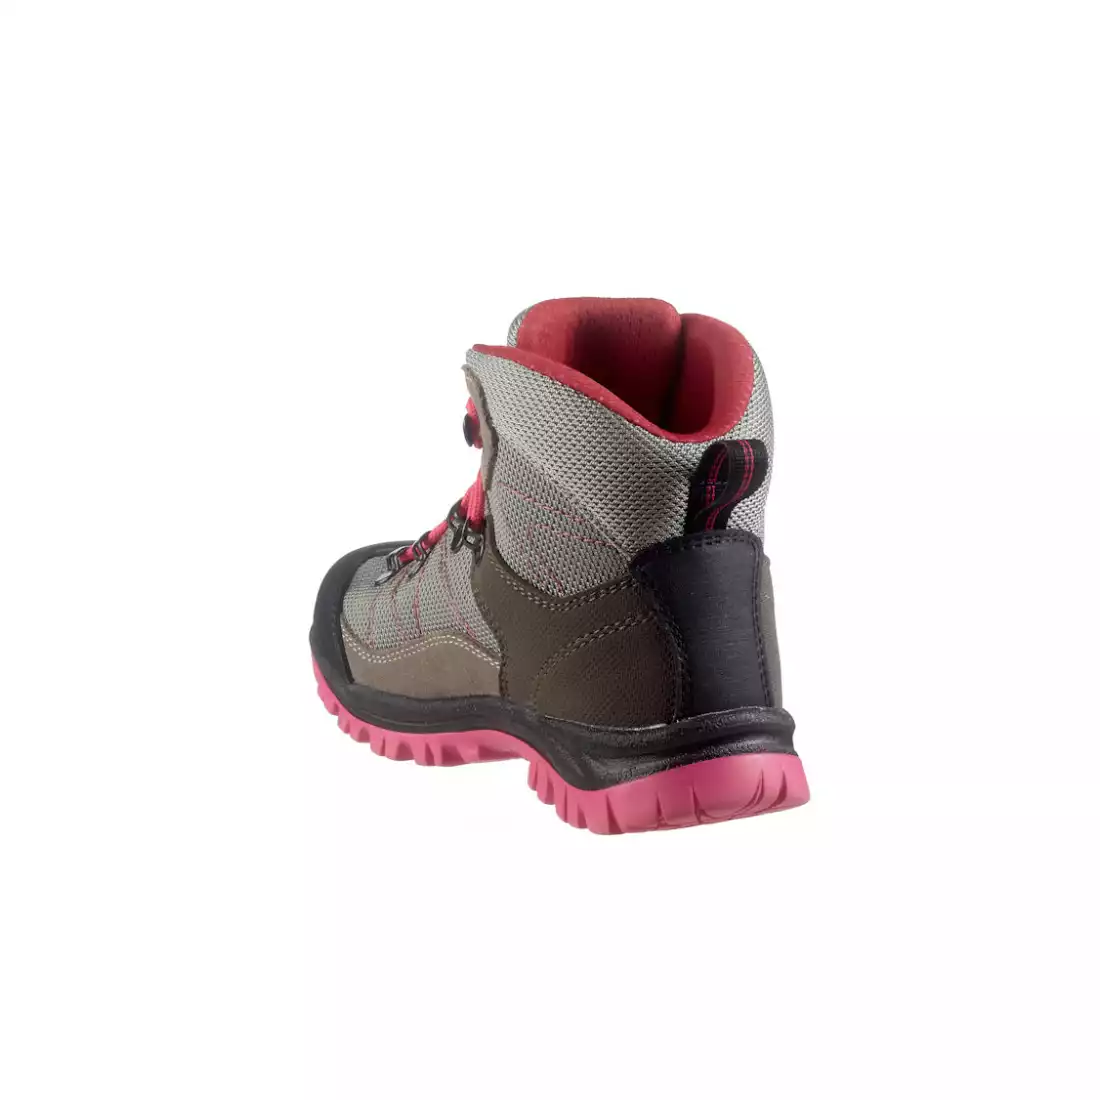 KAYLAND JUNIOR COBRA K KID GTX Children's trekking shoes, GORE-TEX, gray-pink